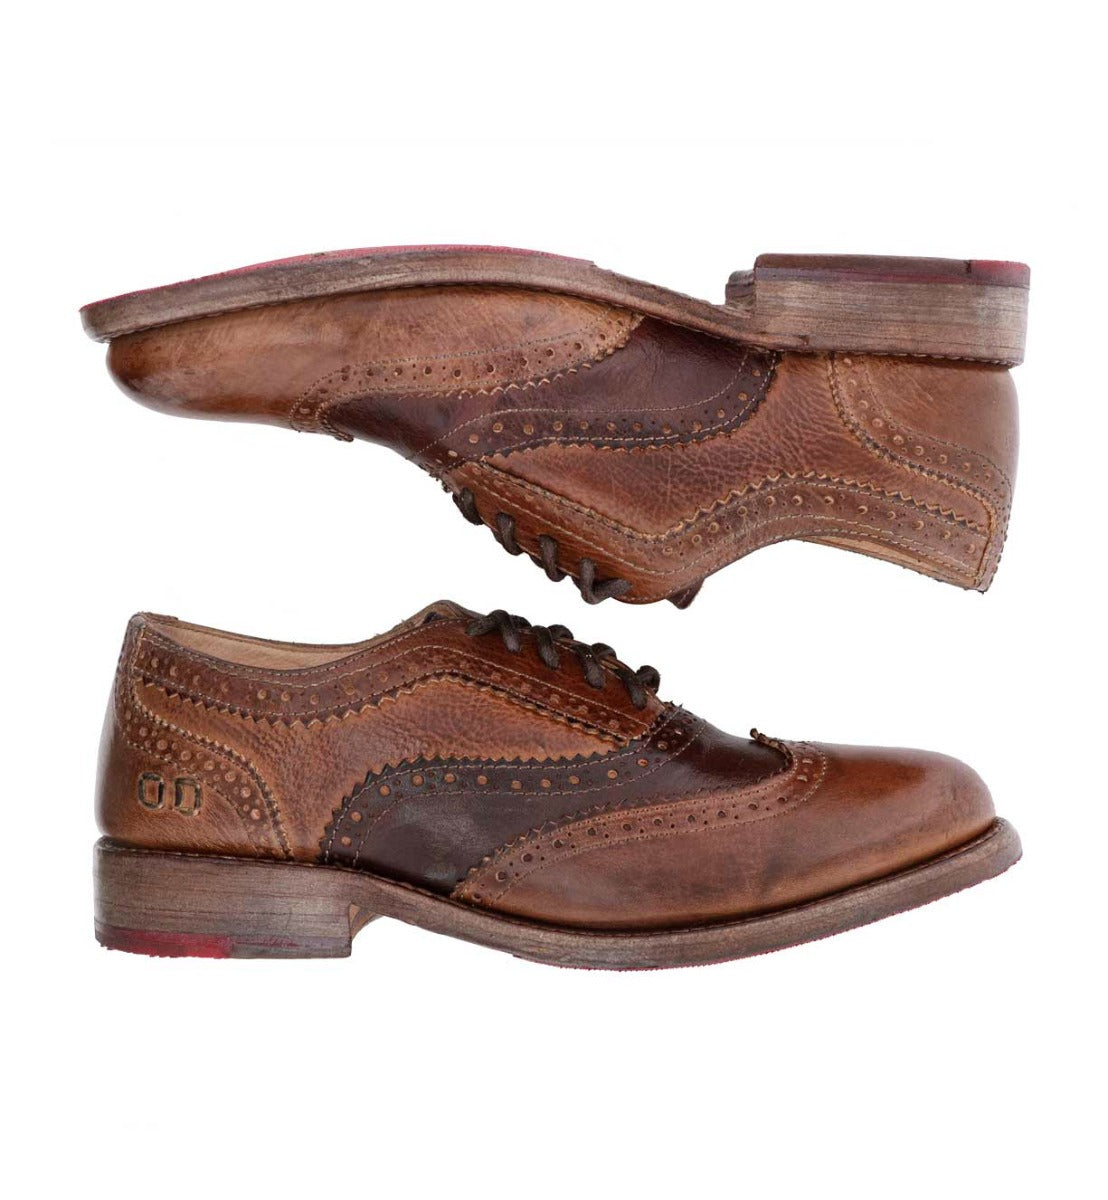 A pair of Bed Stu brown wingtip oxford shoes.